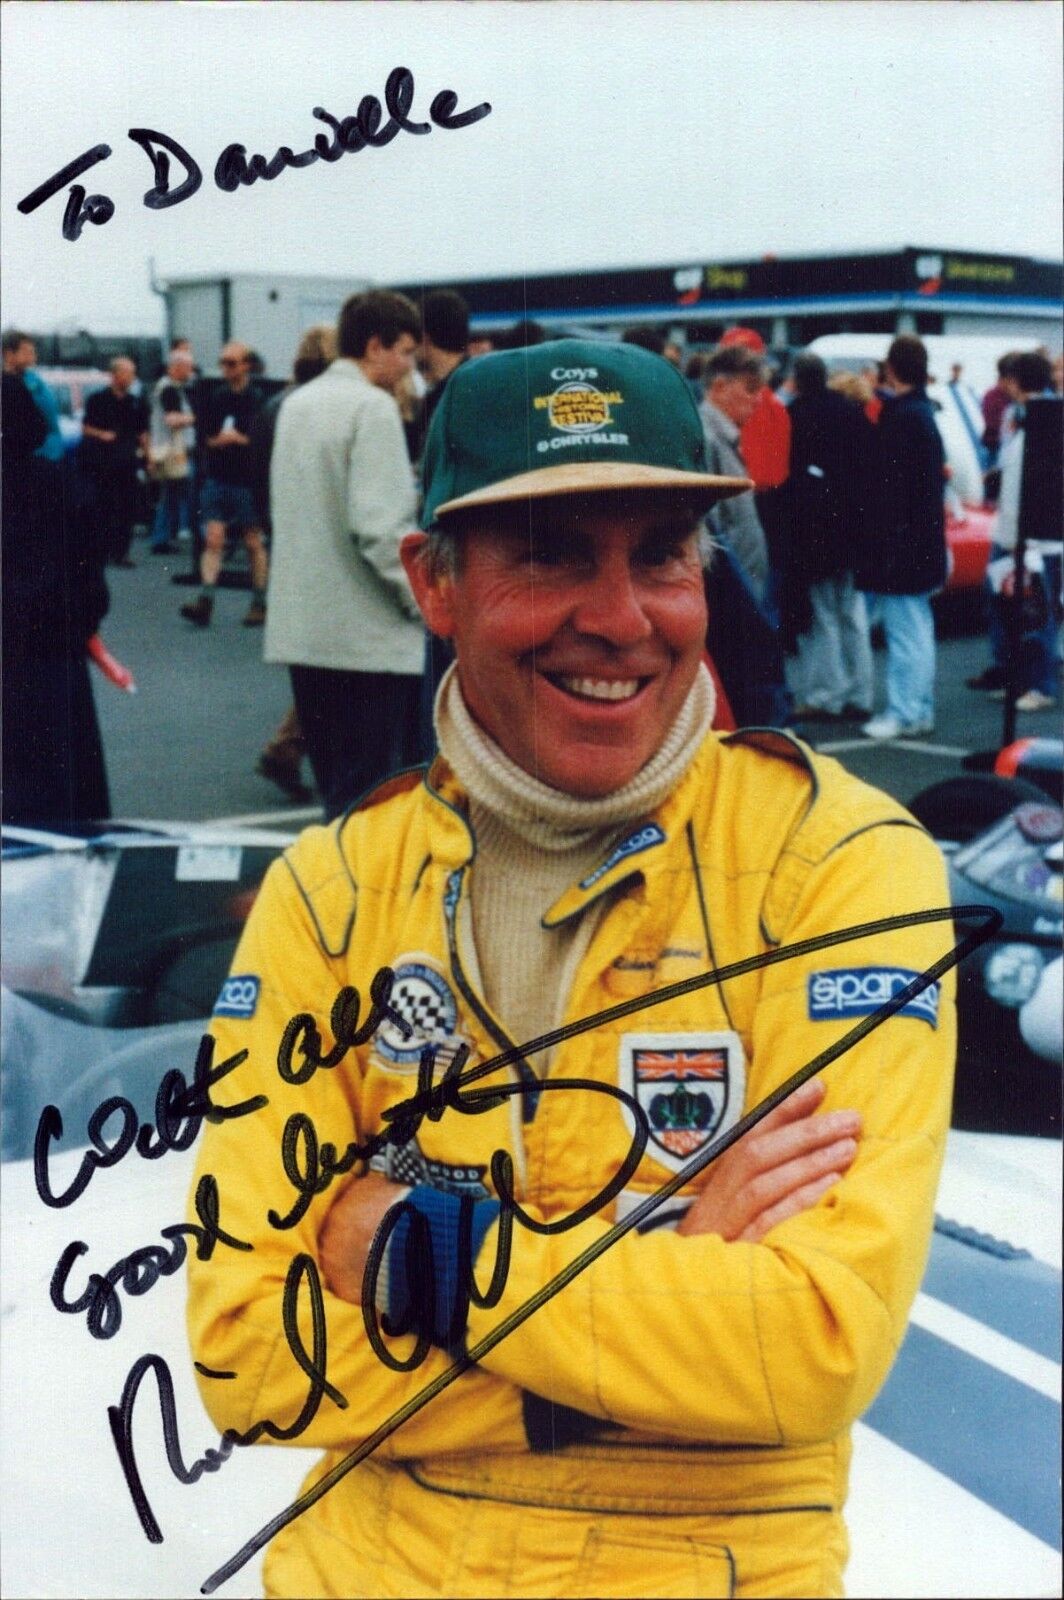 Richard Attwood - Formula 1 - Original Autograph Photo Poster painting (W-6112 +